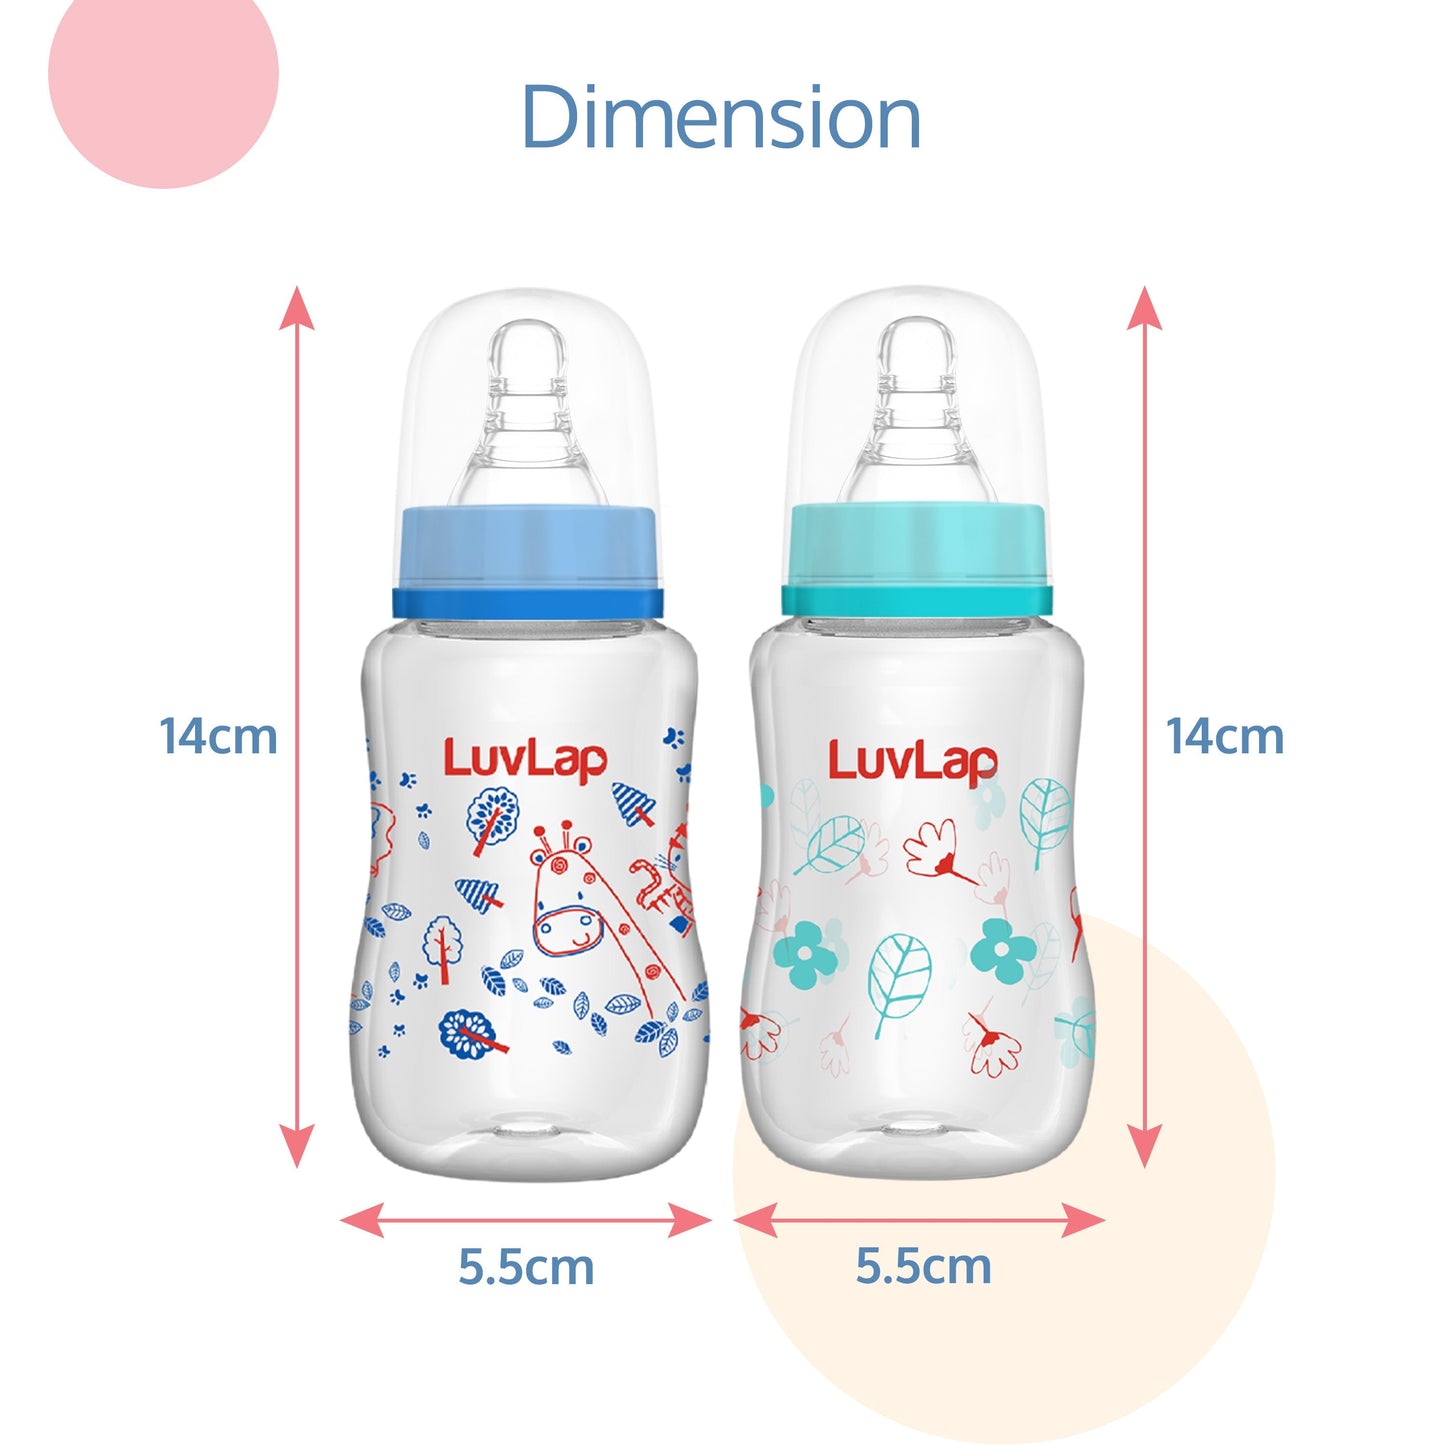 Anti-Colic Slim/Regular Neck Essential Baby Feeding Bottle, 125ml (Pack of 2)